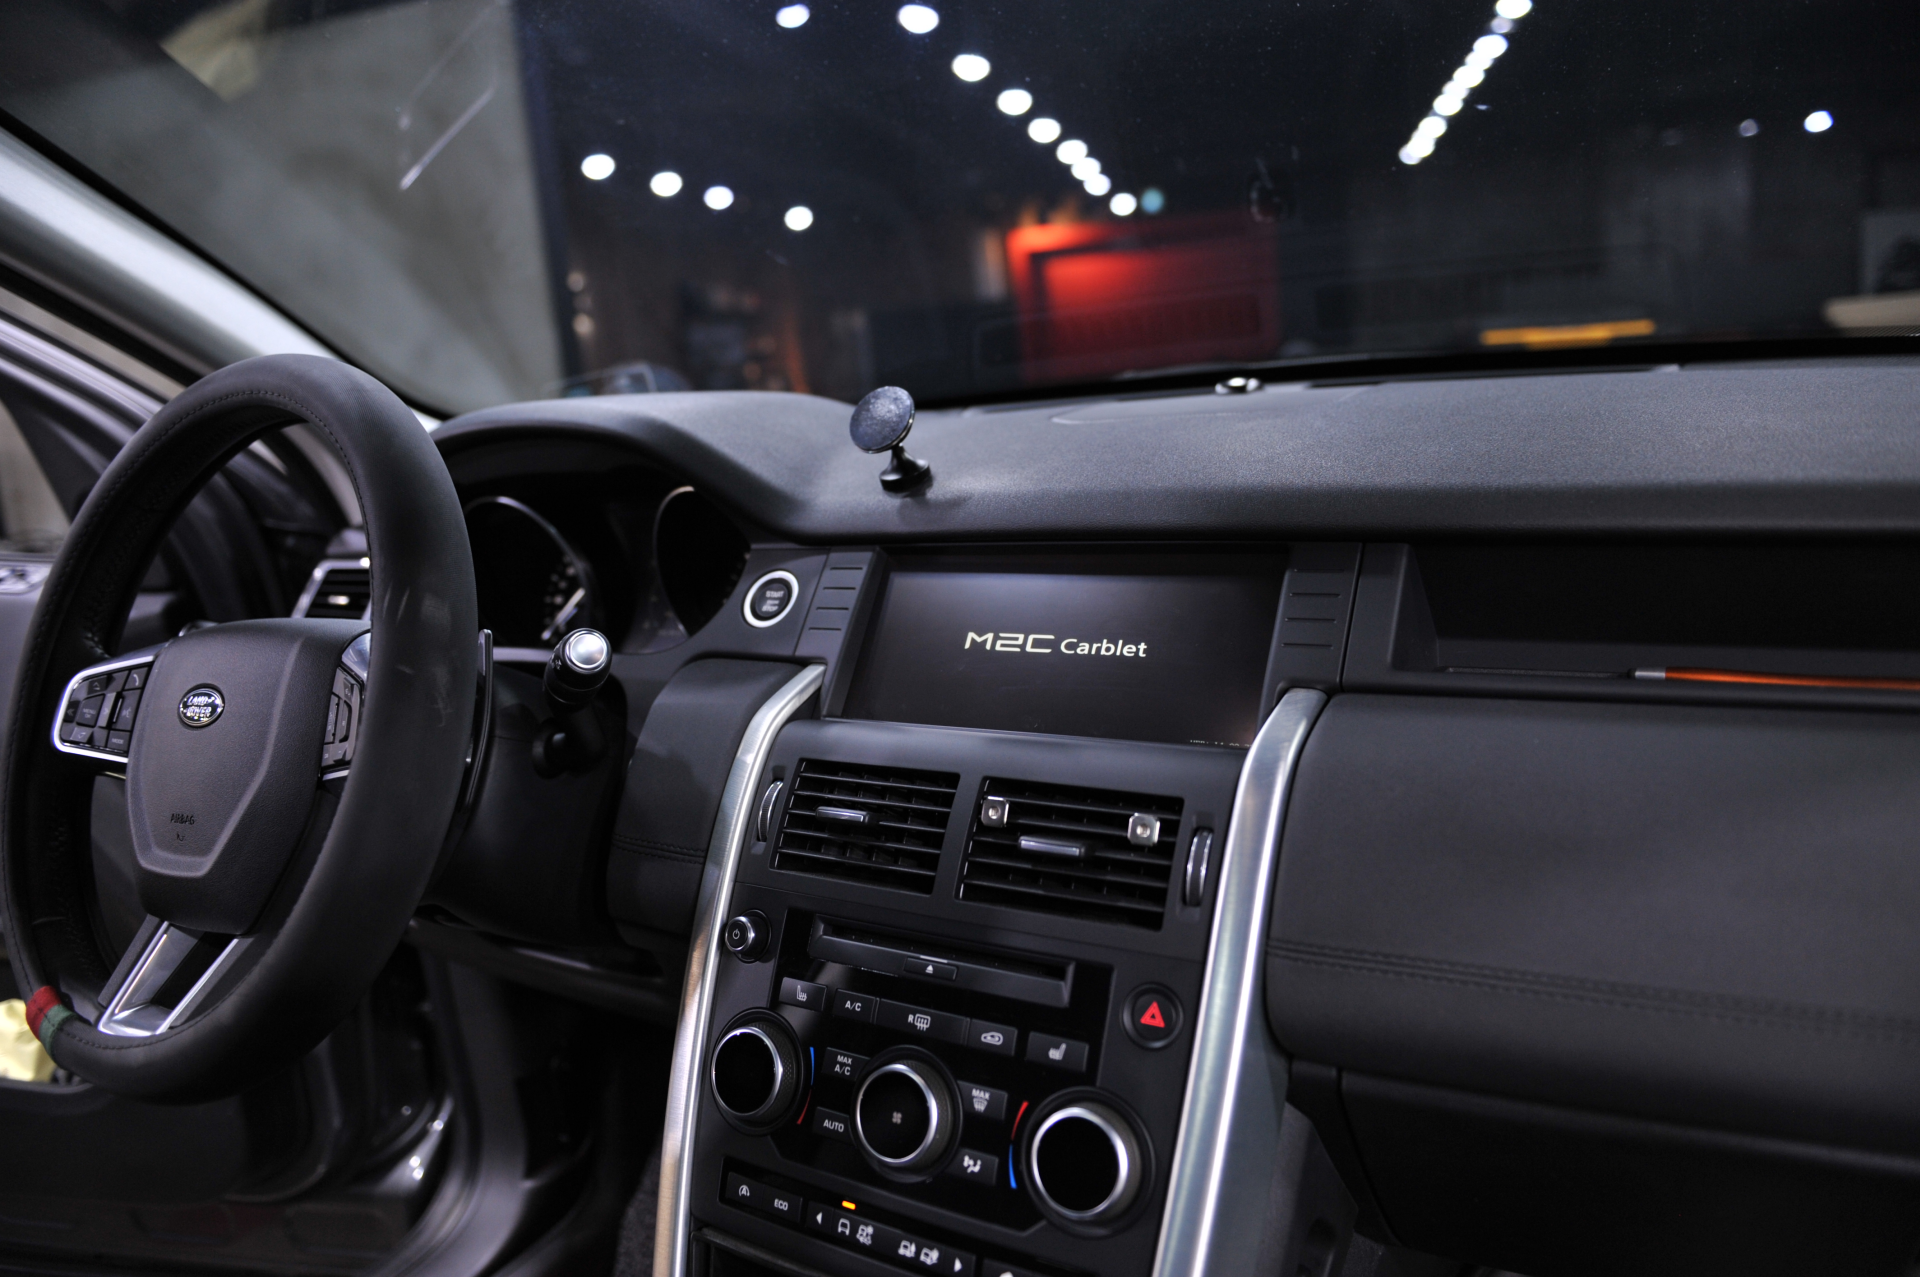 Android System for Land Rover, Jaguar HD-LINK "IW-LR-N23" "M2C-100"